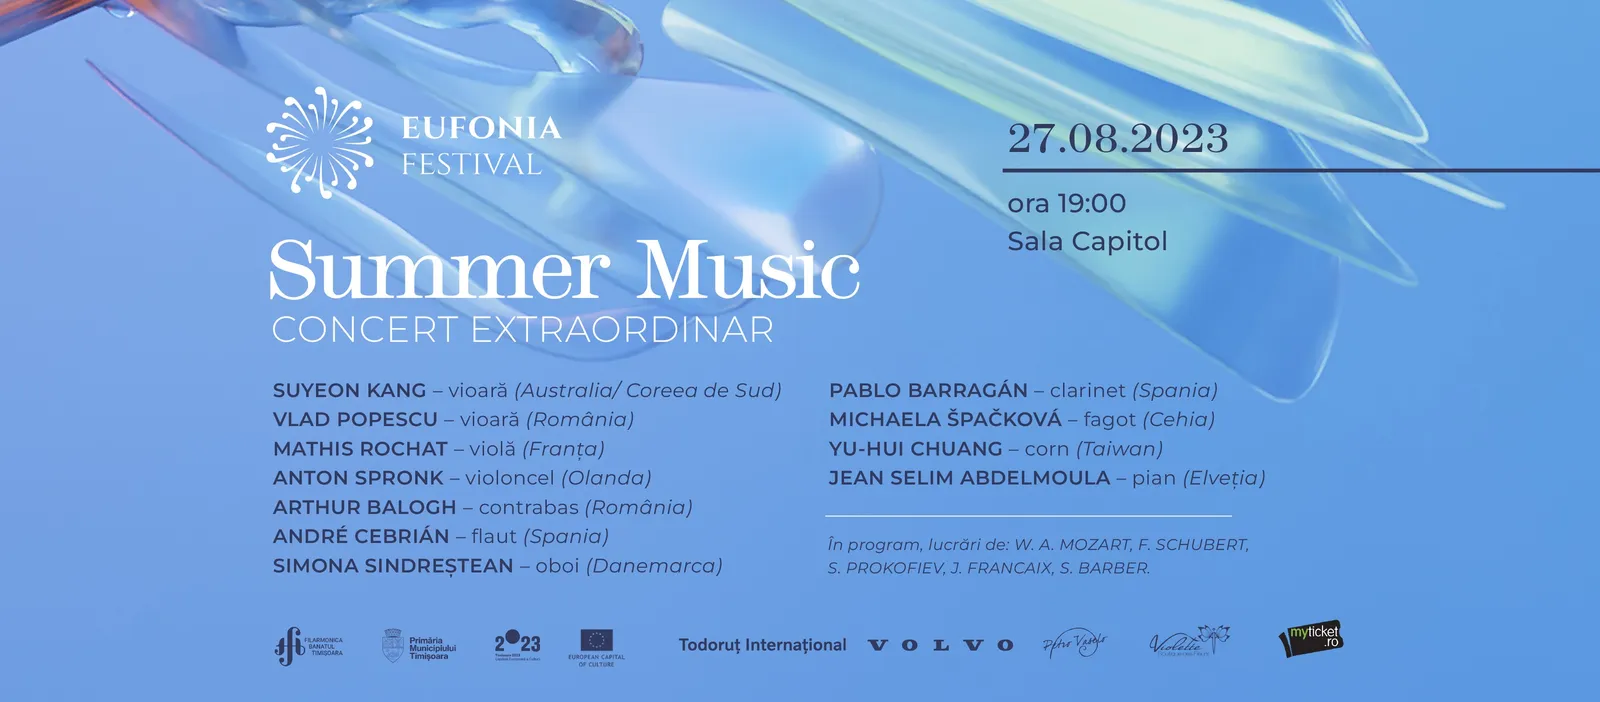 Eufonia Festival Extraordinary Concert | SUMMER MUSIC